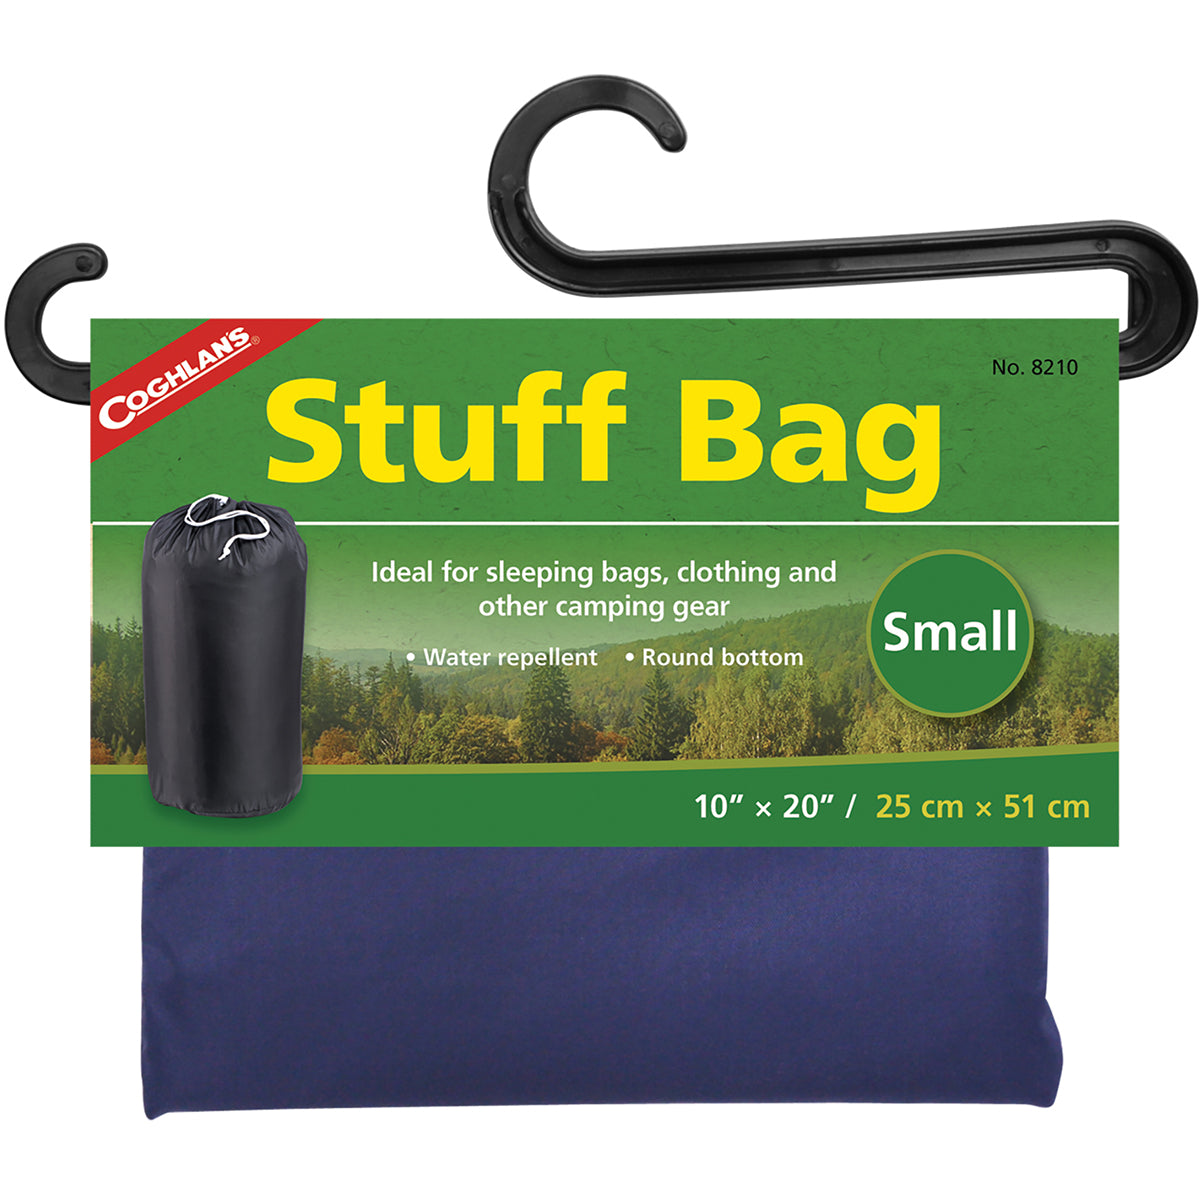 Coghlan's Stuff Bag, 10" x 20", Sack Pouch Sleeping Camping Clothing Storage Coghlan's